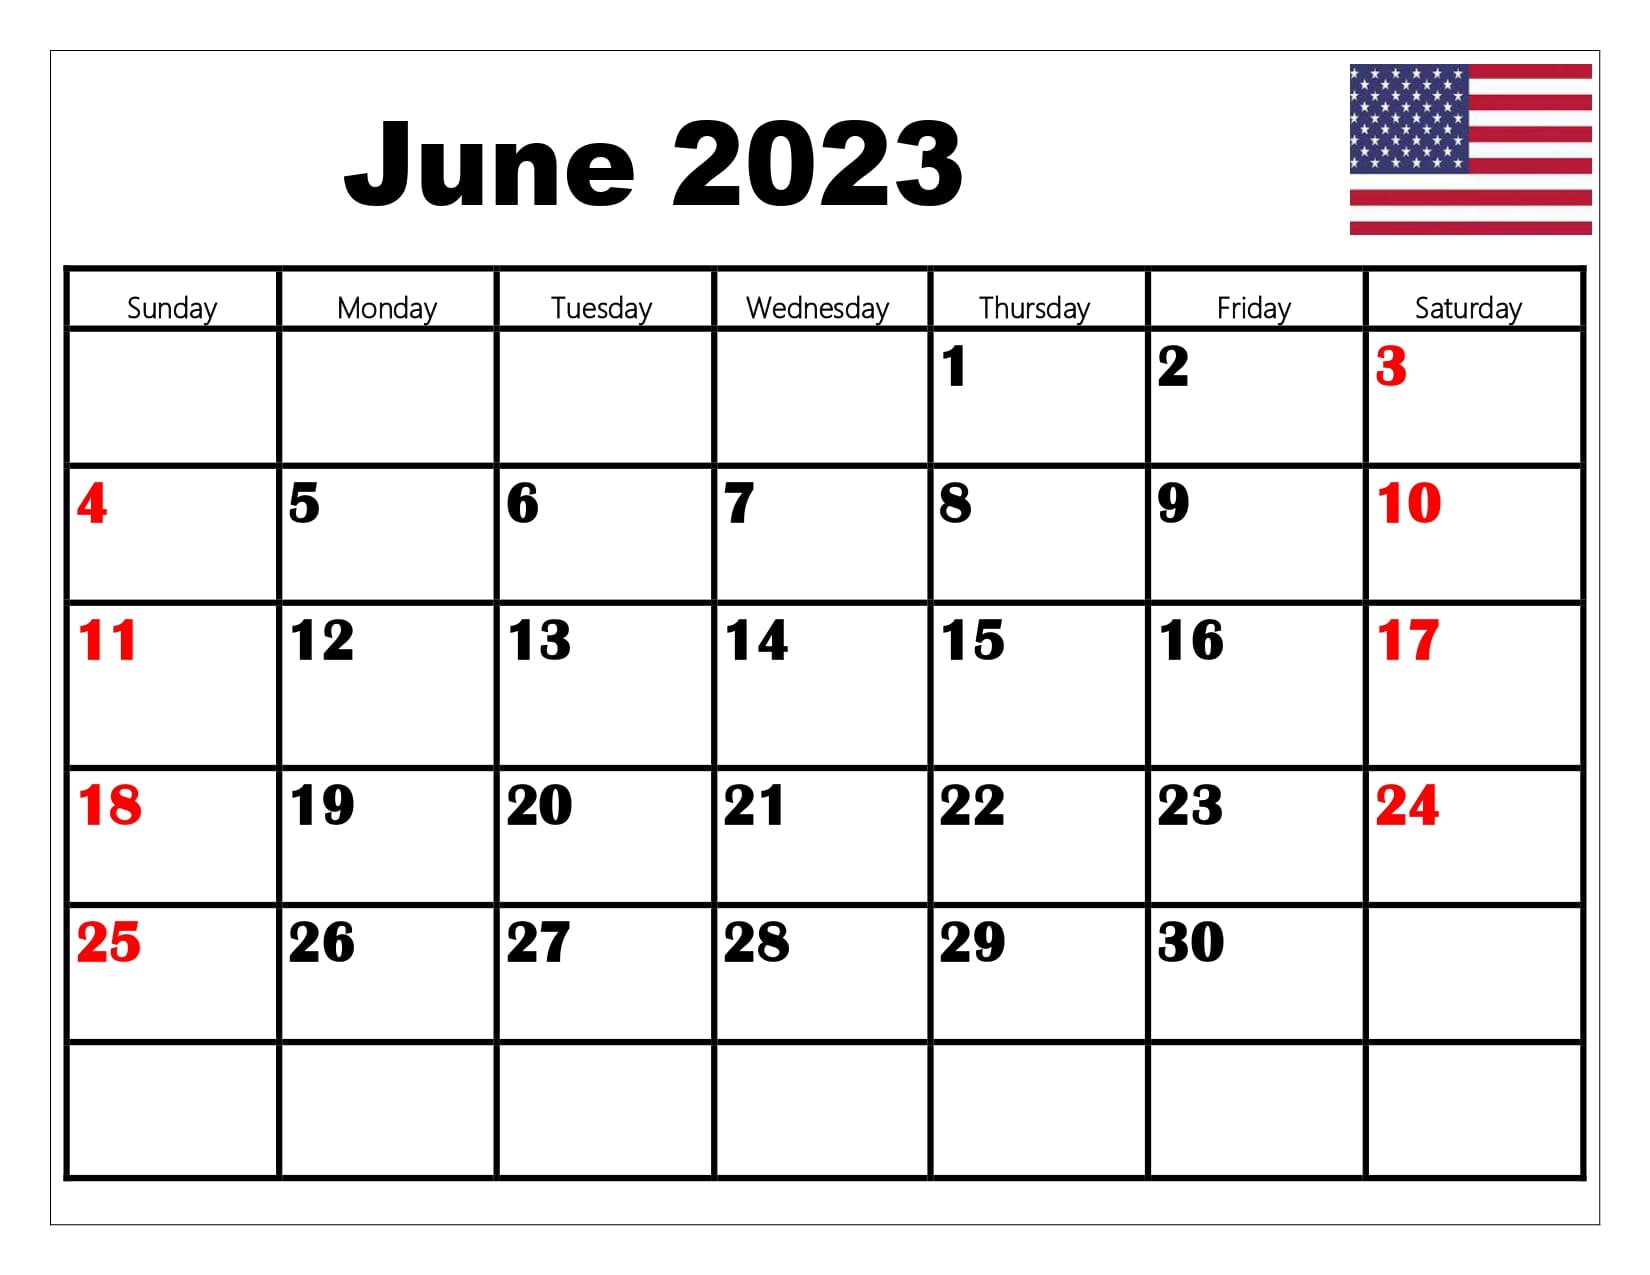 June 2023 Calendar with USA Holidays